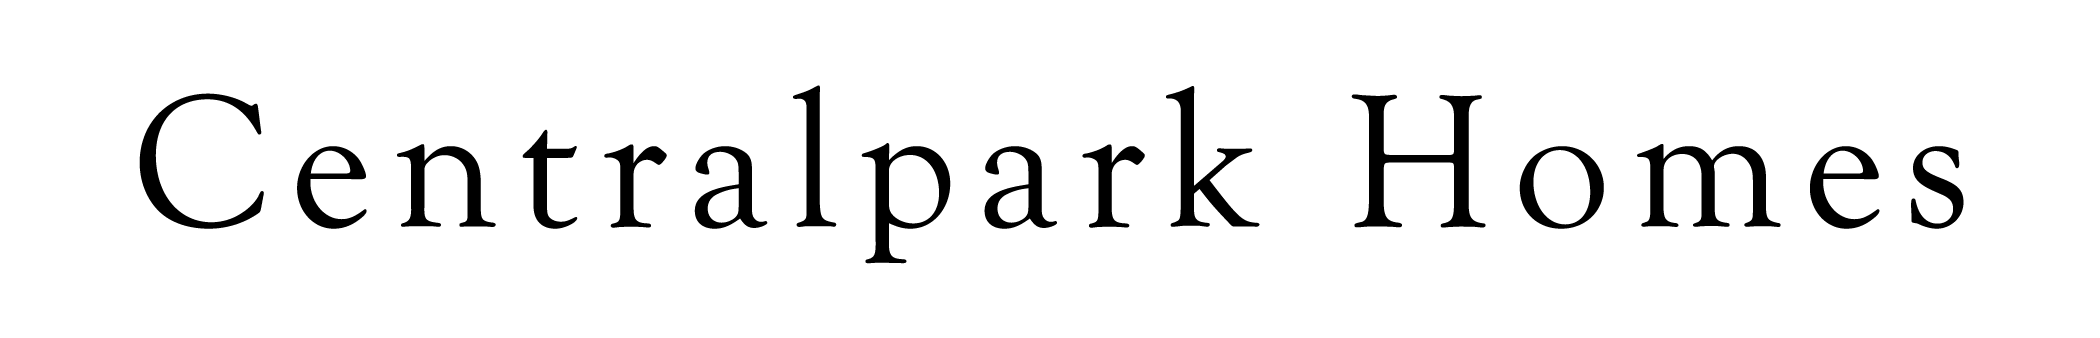 Central Park Homes Logo